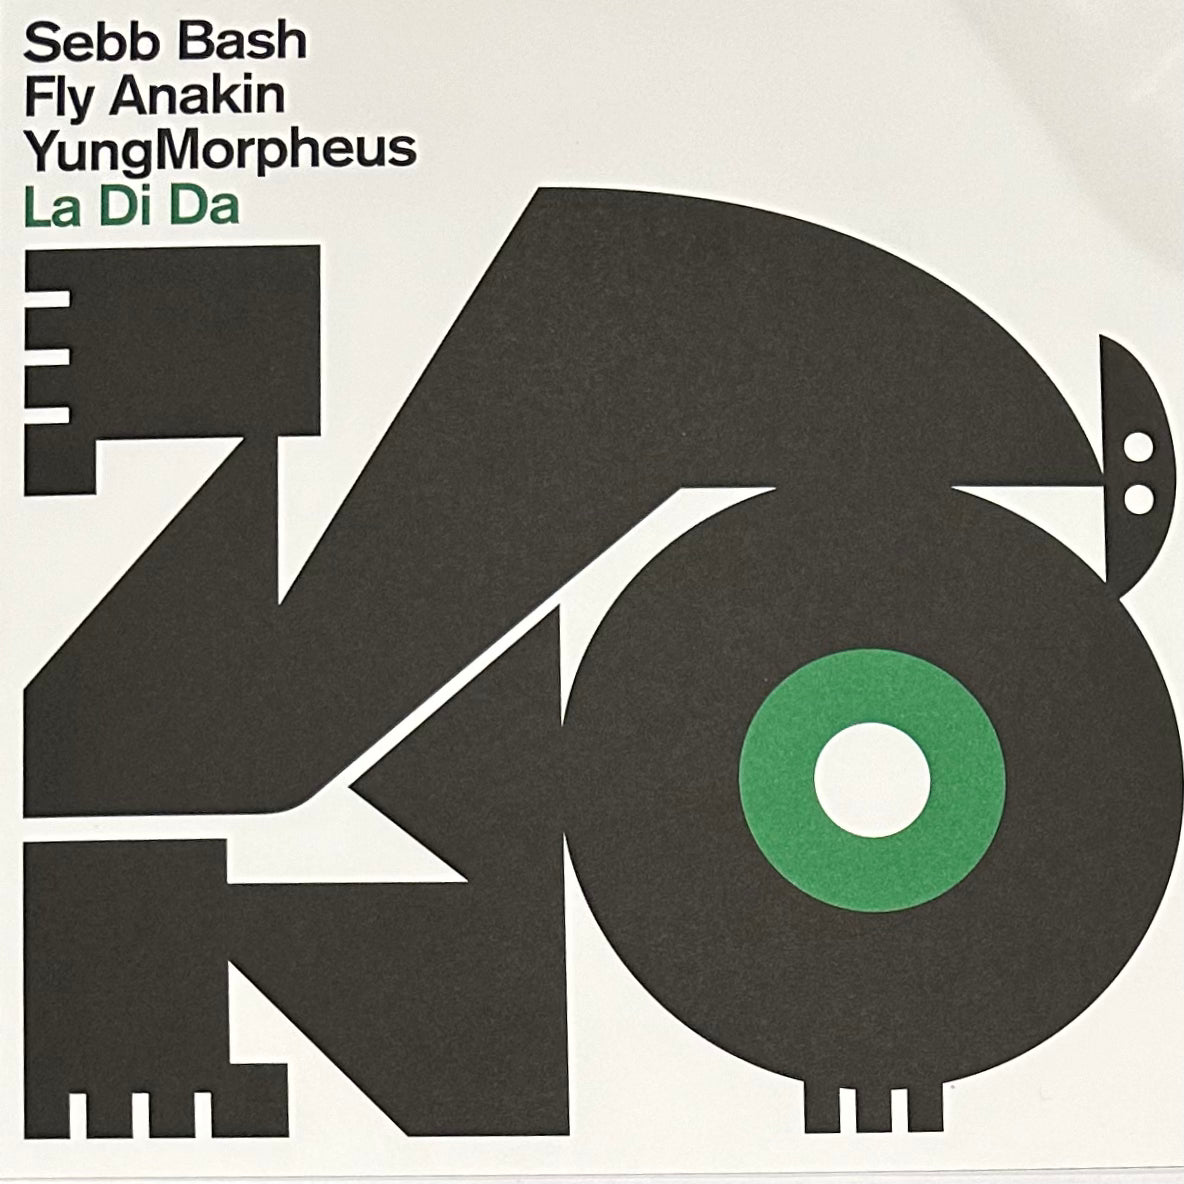 Sebb Bash, Fly Anakin & YungMorpheus - La Di Da b/w Inst